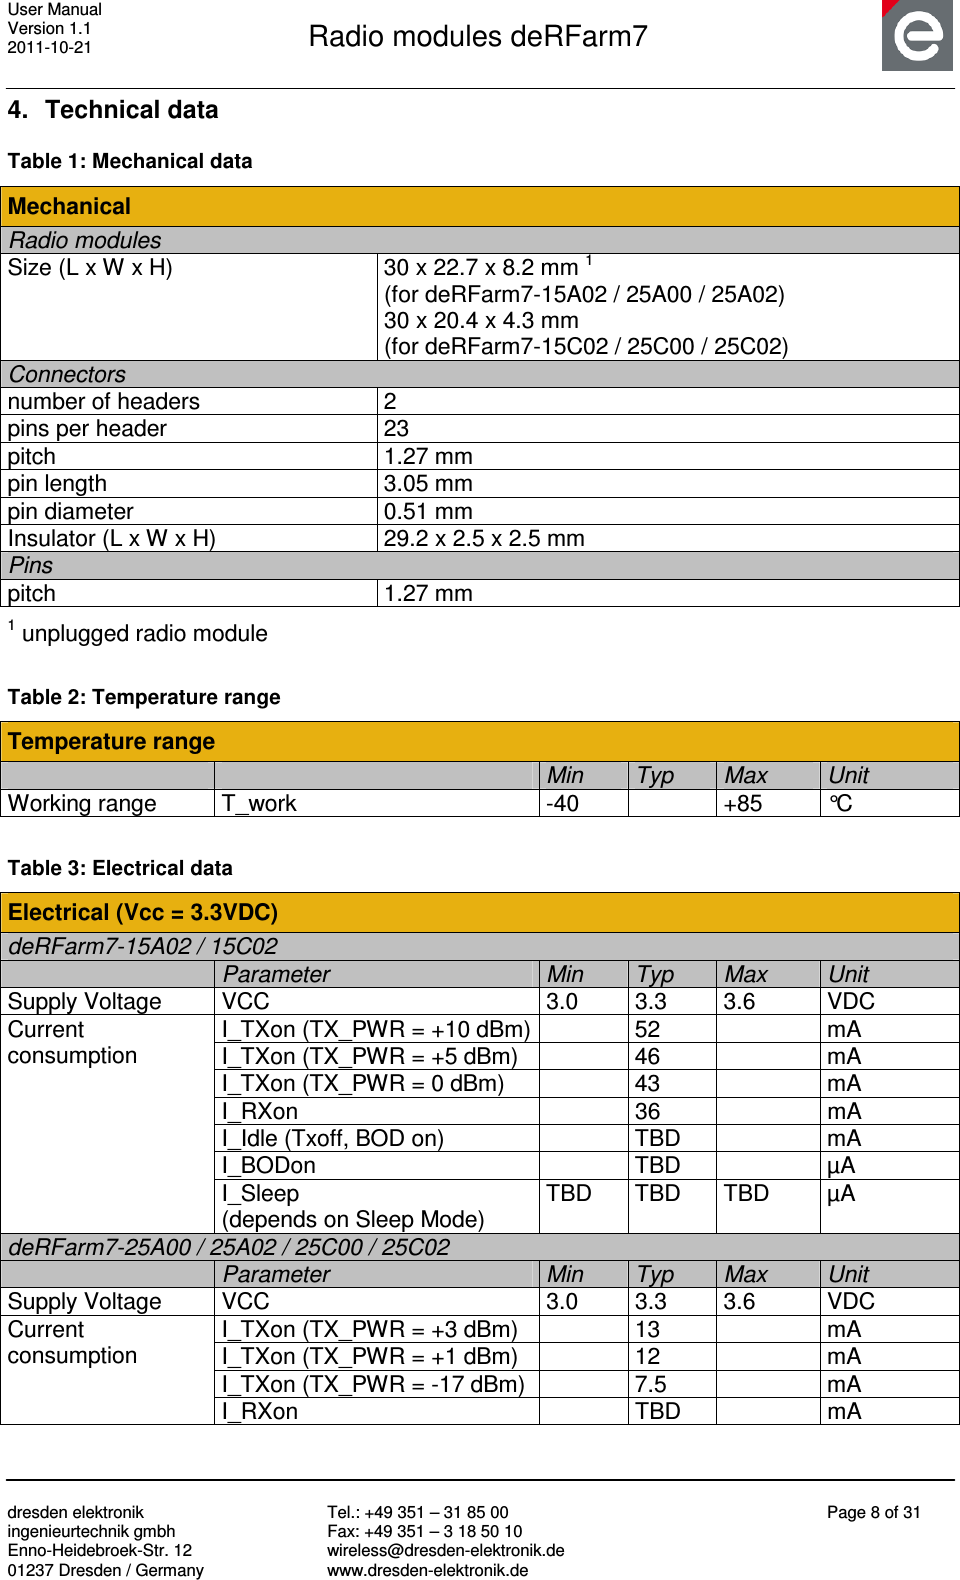 User Manual Version 1.1 2011-10-21       Radio modules deRFarm7       dresden elektronik ingenieurtechnik gmbh Enno-Heidebroek-Str. 12 01237 Dresden / Germany Tel.: +49 351 – 31 85 00 Fax: +49 351 – 3 18 50 10 wireless@dresden-elektronik.de www.dresden-elektronik.de Page 8 of 31  4.  Technical data Table 1: Mechanical data Mechanical  Radio modules  Size (L x W x H)   30 x 22.7 x 8.2 mm 1 (for deRFarm7-15A02 / 25A00 / 25A02) 30 x 20.4 x 4.3 mm (for deRFarm7-15C02 / 25C00 / 25C02) Connectors number of headers  2 pins per header  23 pitch  1.27 mm pin length  3.05 mm pin diameter  0.51 mm Insulator (L x W x H)   29.2 x 2.5 x 2.5 mm Pins pitch  1.27 mm 1 unplugged radio module  Table 2: Temperature range Temperature range     Min  Typ  Max  Unit Working range  T_work  -40    +85  °C  Table 3: Electrical data Electrical (Vcc = 3.3VDC) deRFarm7-15A02 / 15C02   Parameter  Min  Typ  Max  Unit Supply Voltage  VCC  3.0  3.3  3.6  VDC Current  consumption  I_TXon (TX_PWR = +10 dBm)   52    mA I_TXon (TX_PWR = +5 dBm)    46    mA I_TXon (TX_PWR = 0 dBm)    43    mA I_RXon    36    mA I_Idle (Txoff, BOD on)    TBD    mA I_BODon    TBD    µA I_Sleep  (depends on Sleep Mode) TBD  TBD  TBD  µA deRFarm7-25A00 / 25A02 / 25C00 / 25C02   Parameter  Min  Typ  Max  Unit Supply Voltage  VCC  3.0  3.3  3.6  VDC Current  consumption  I_TXon (TX_PWR = +3 dBm)    13    mA I_TXon (TX_PWR = +1 dBm)    12    mA I_TXon (TX_PWR = -17 dBm)    7.5    mA I_RXon    TBD    mA 